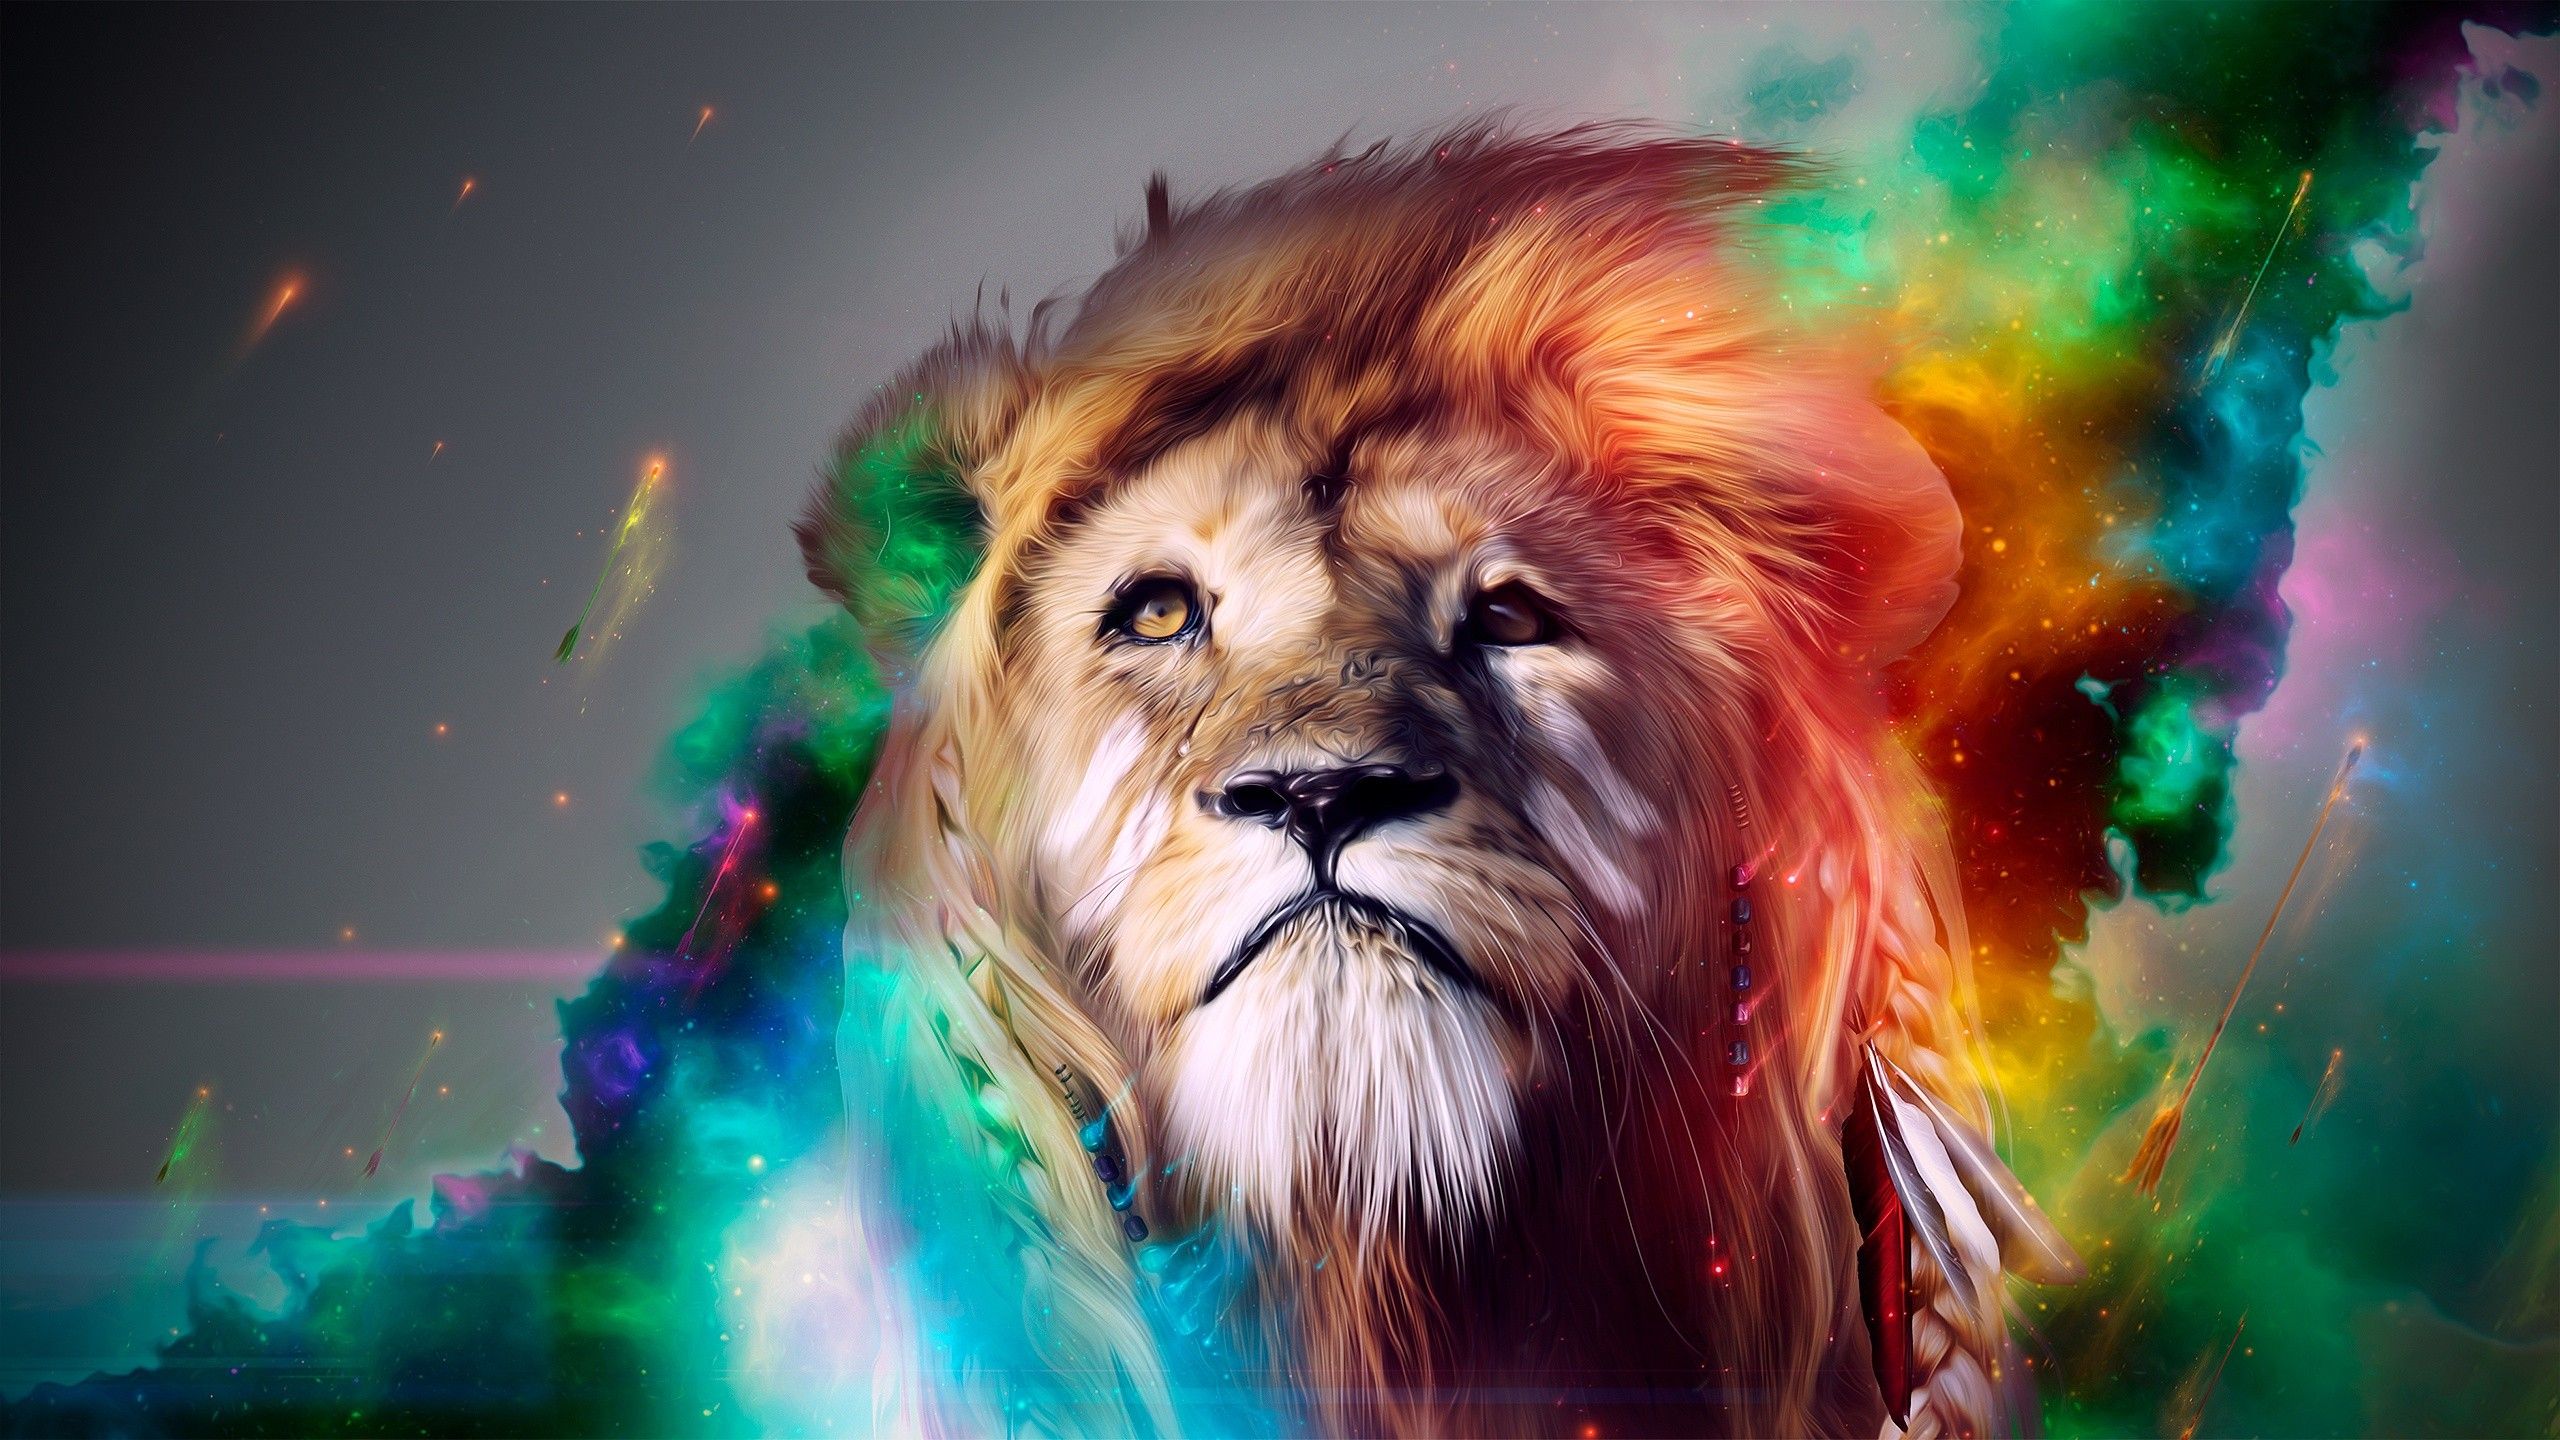 Lion Background For Desktop Wallpaper X Px Mb